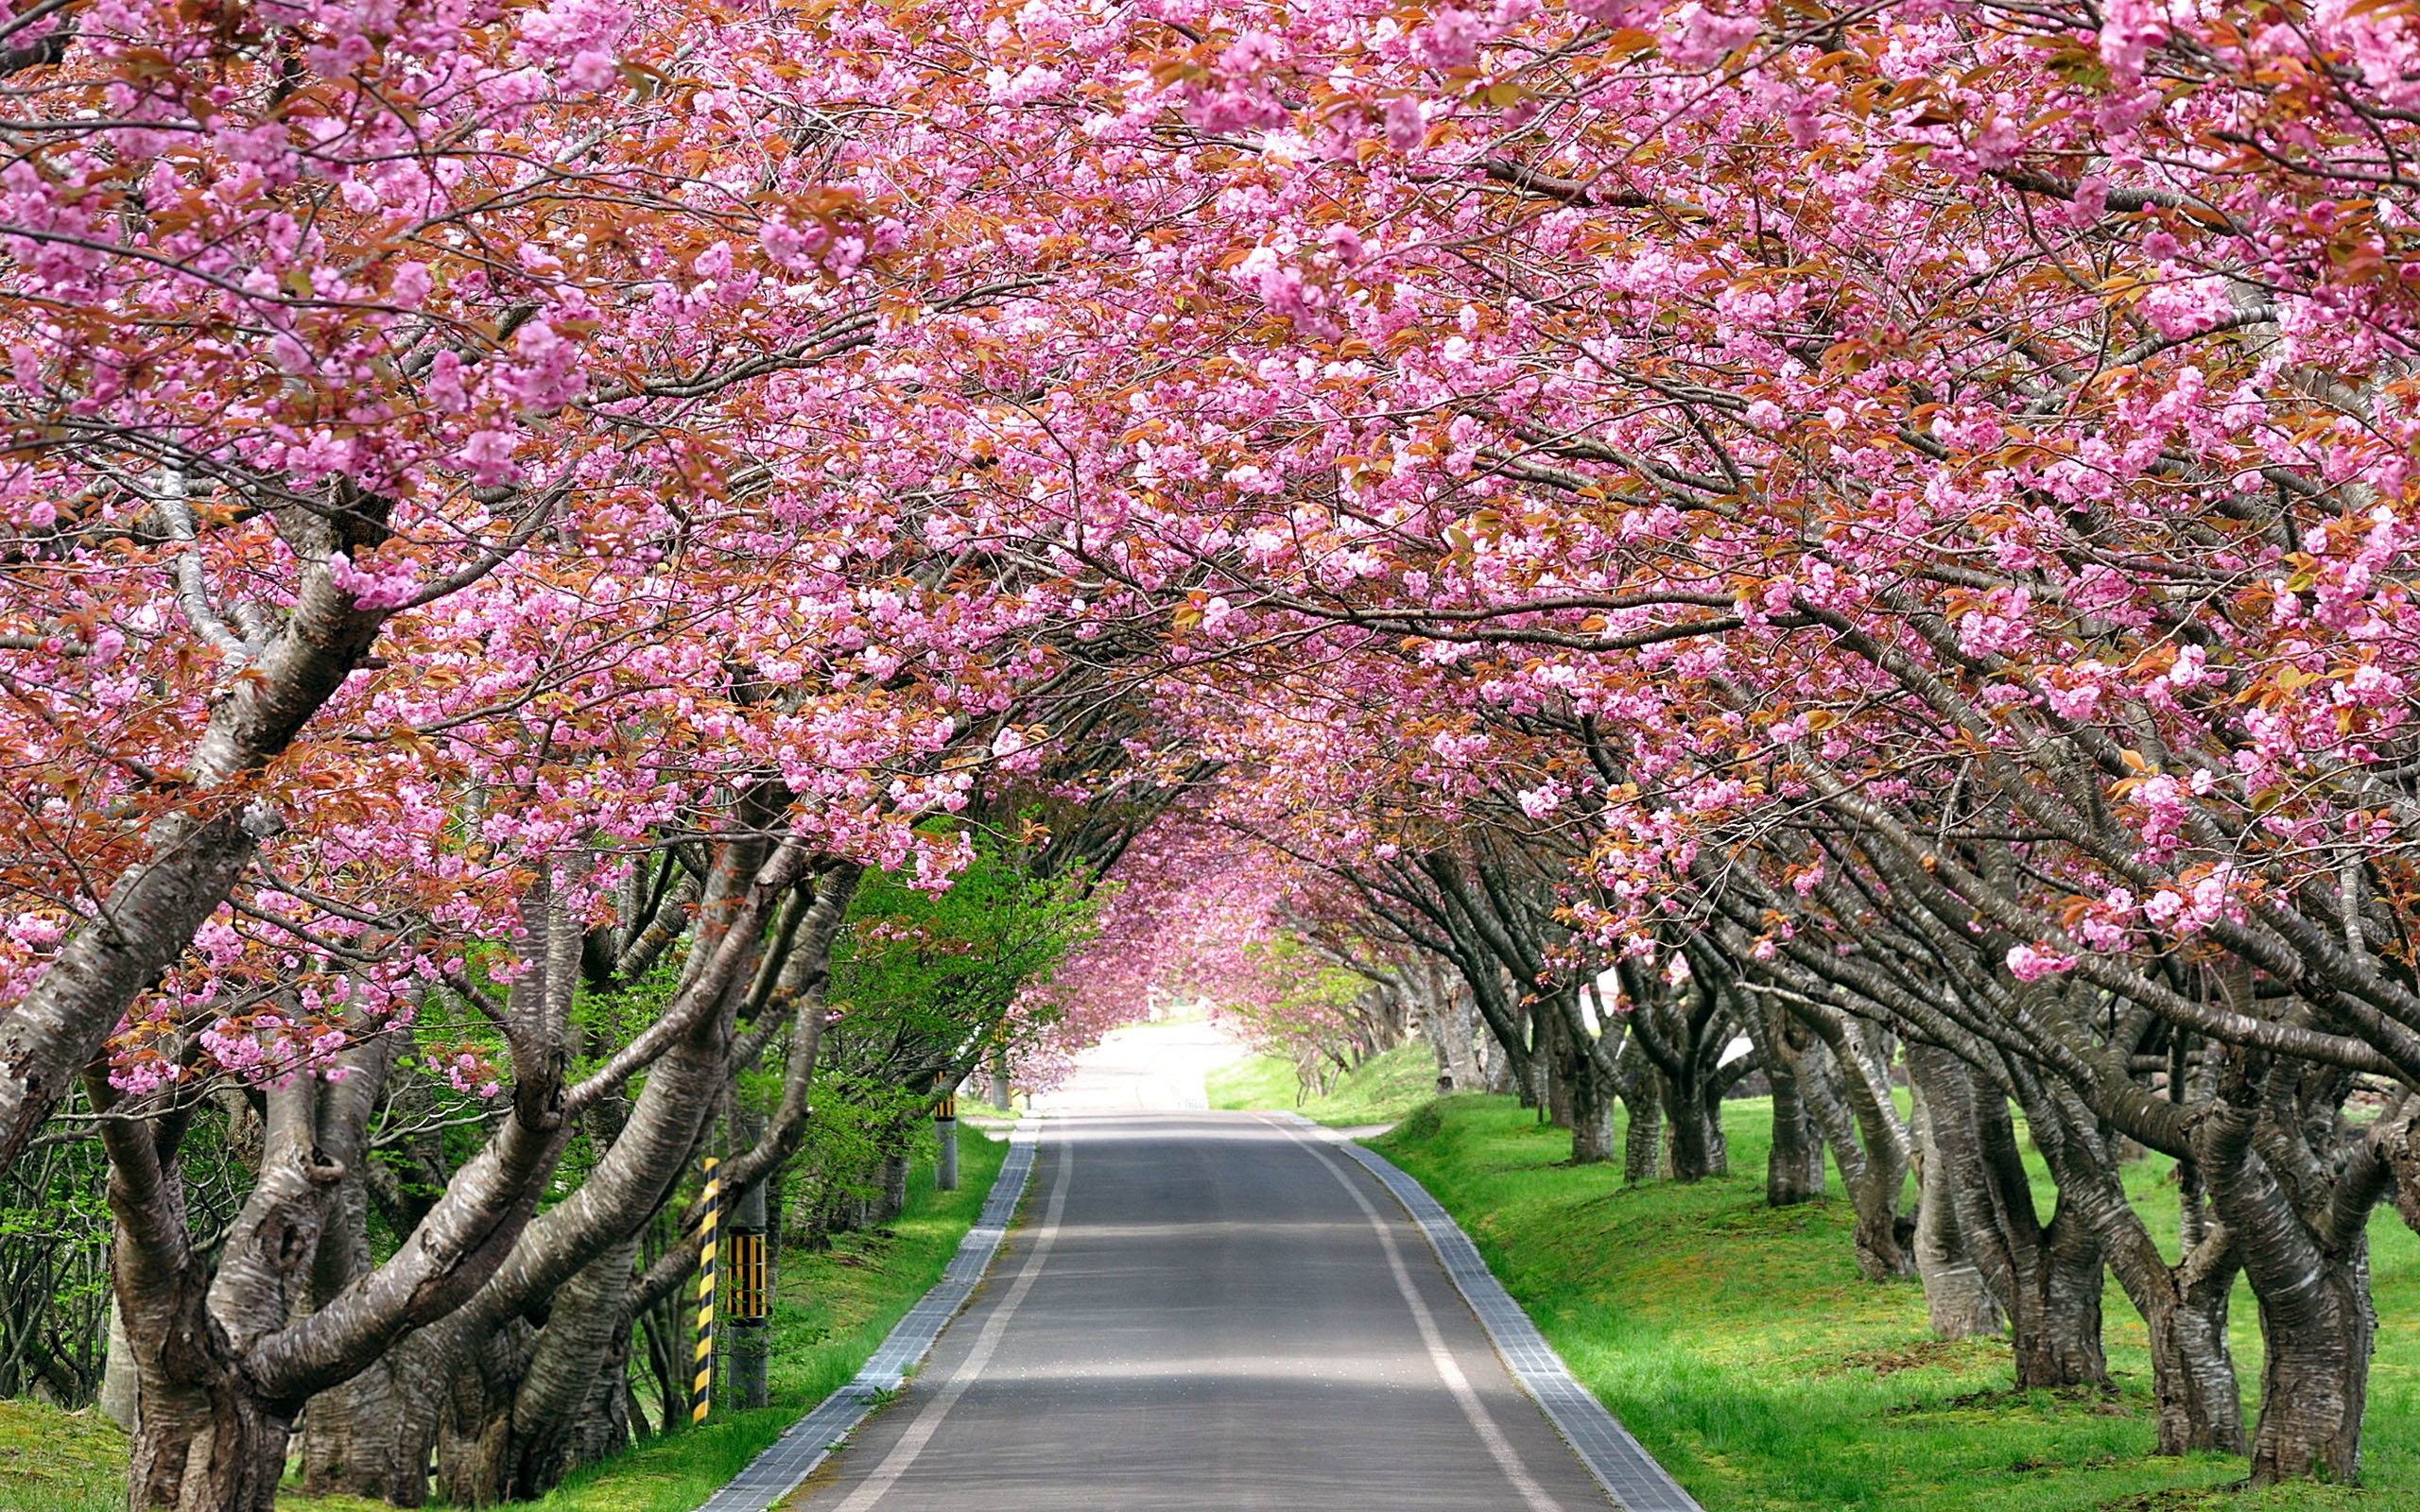 Splendid Cherry Blossom for 2560 x 1600 widescreen resolution